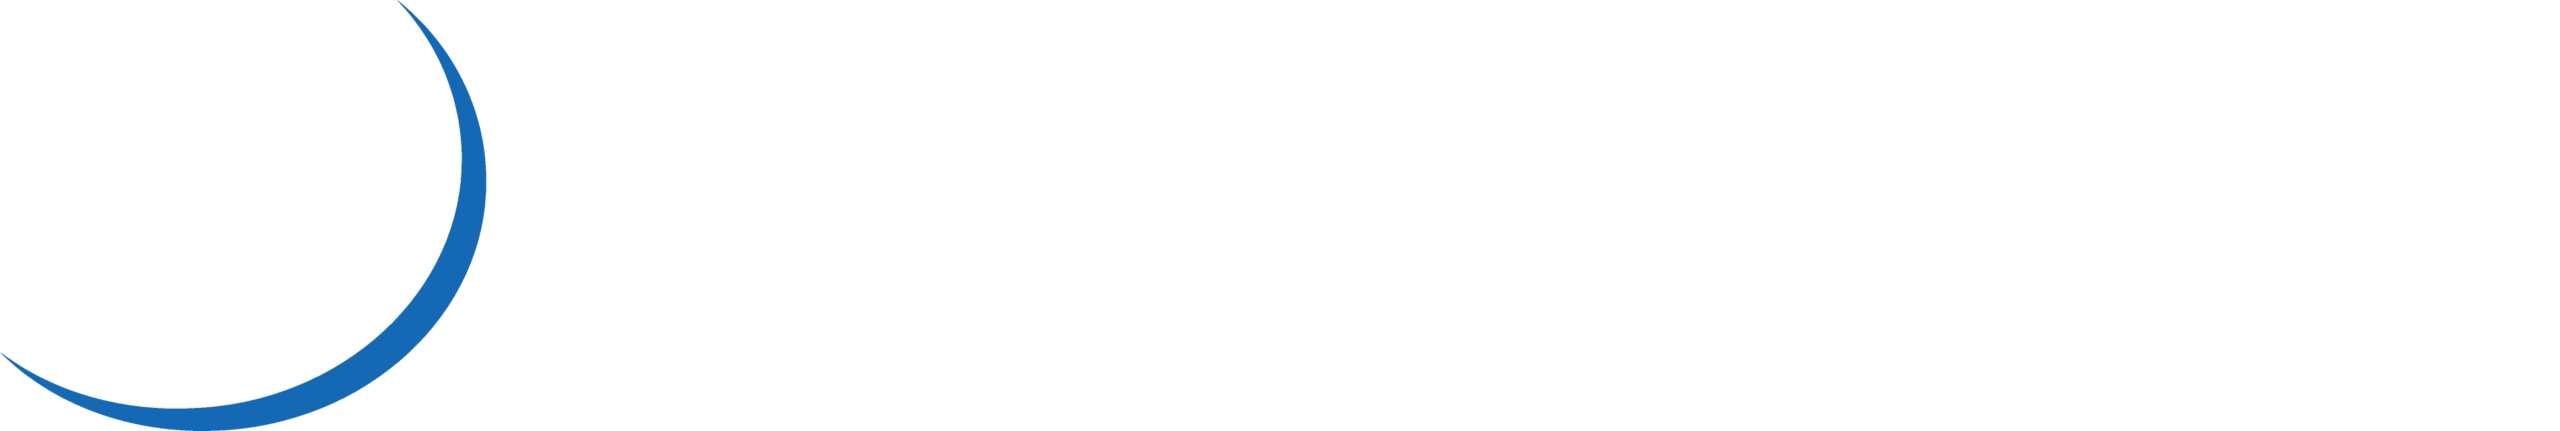 Main logo for Aerospace & Defense website